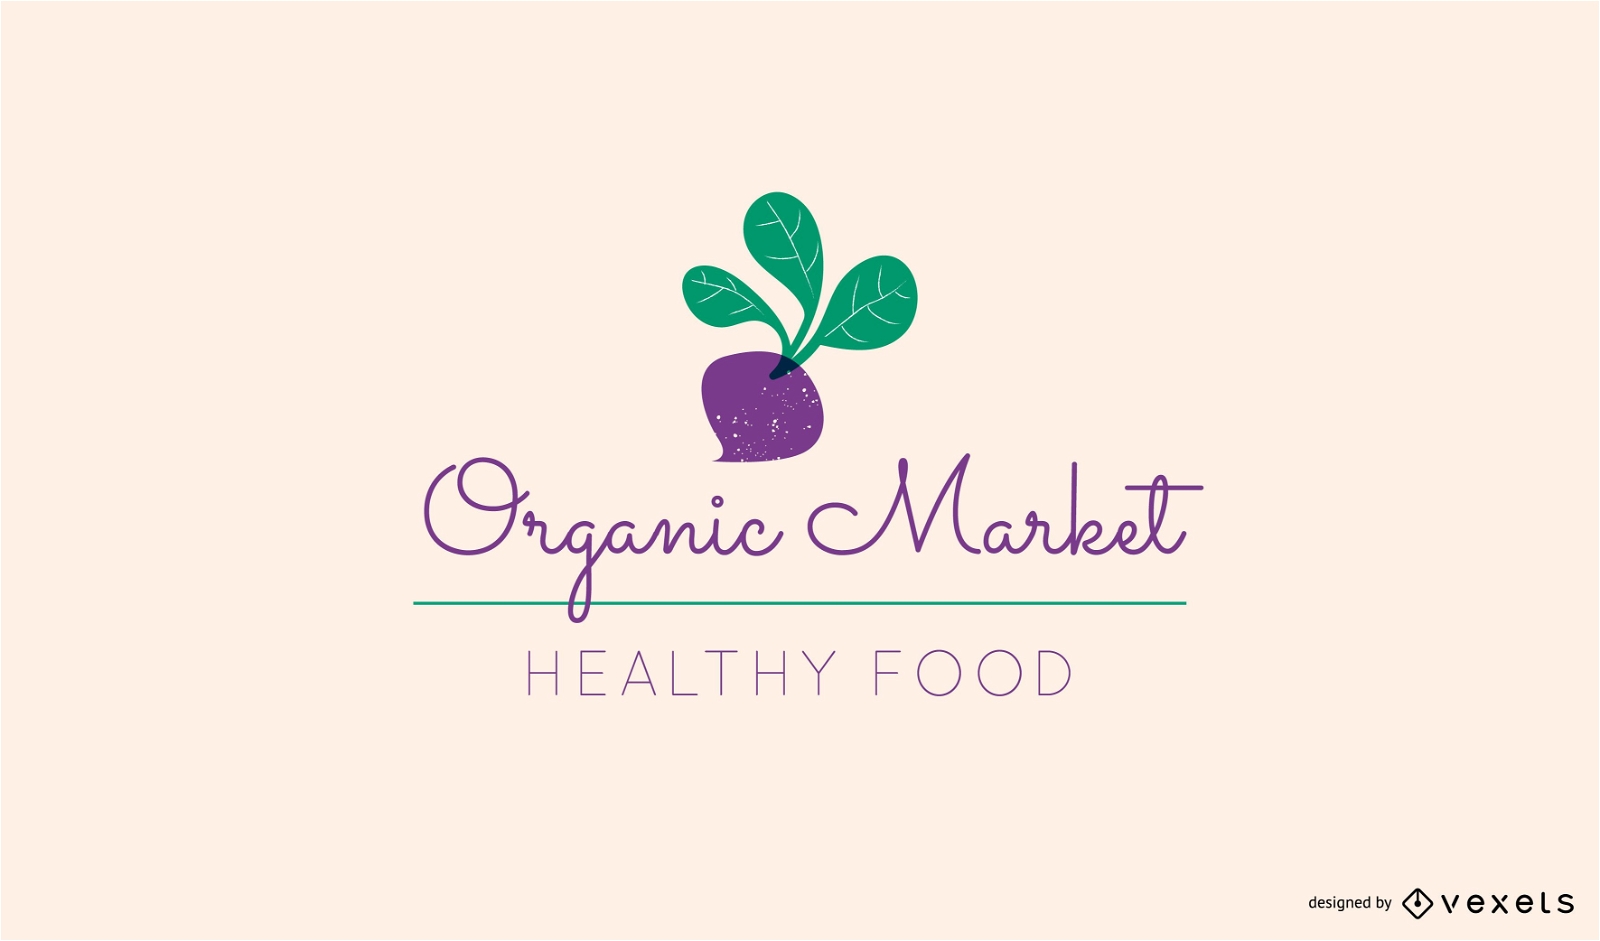 Organic market beetroot logo template